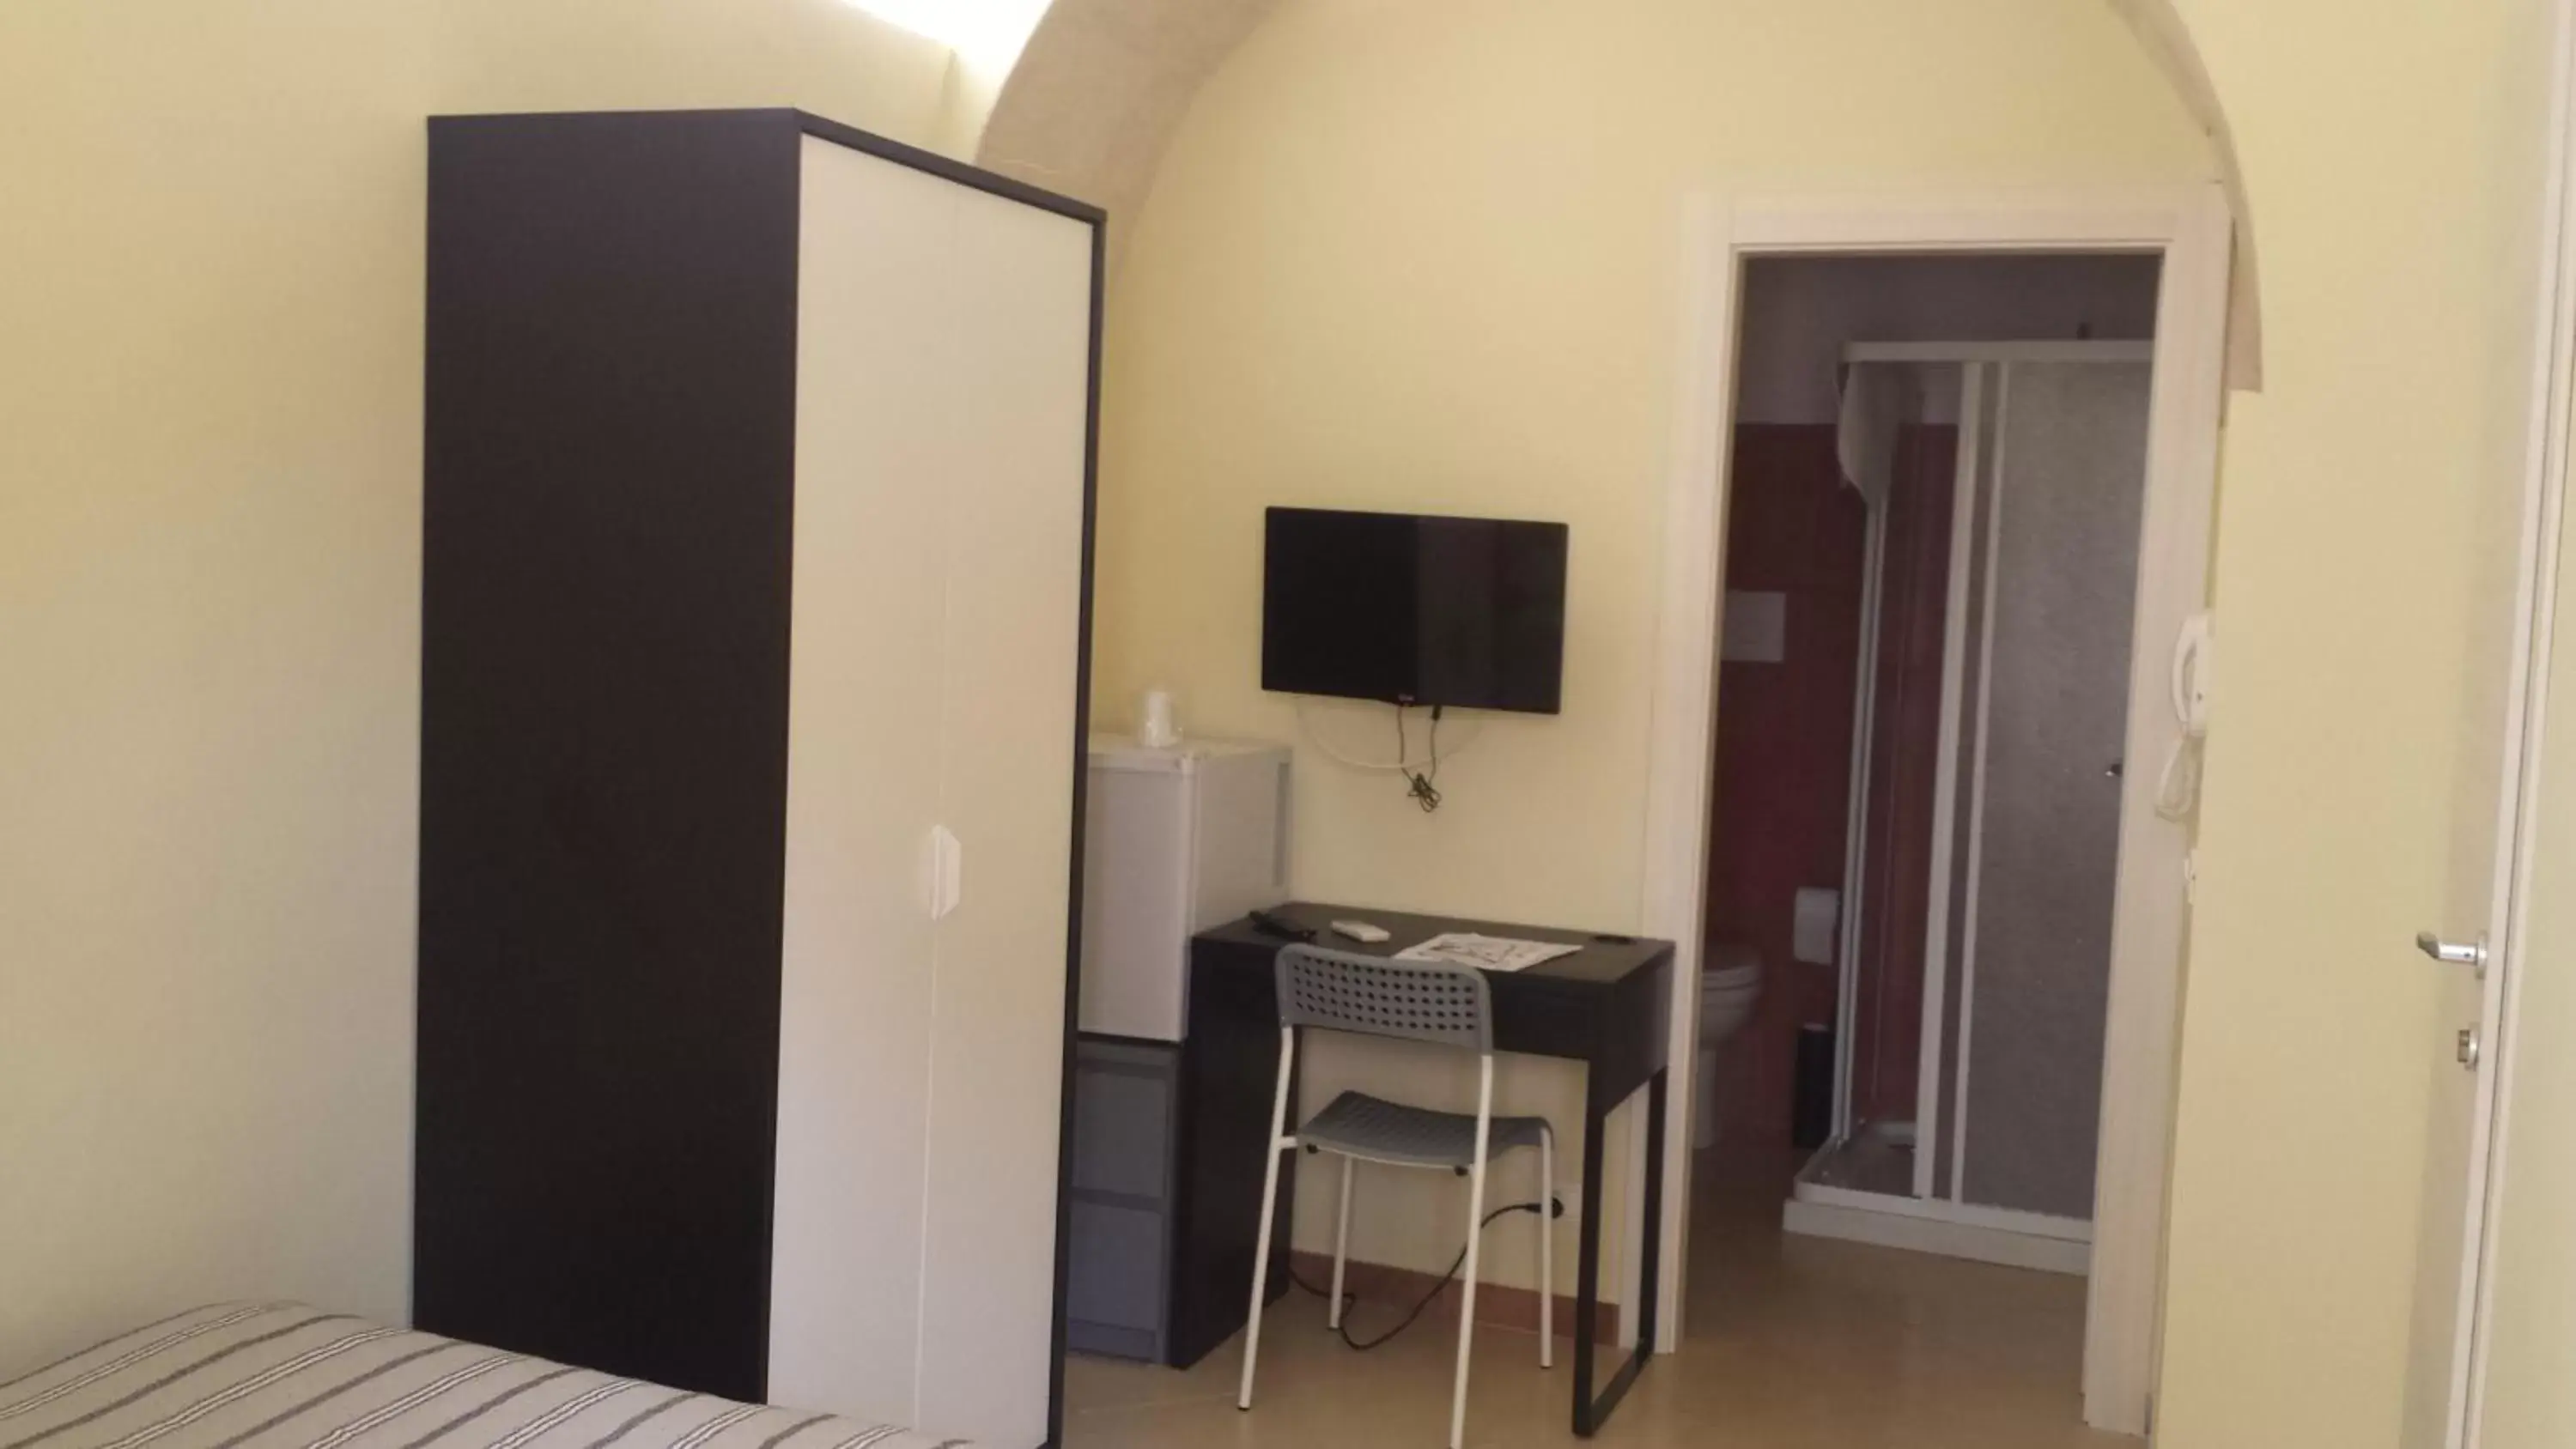 Bedroom, TV/Entertainment Center in Beda Ragusa